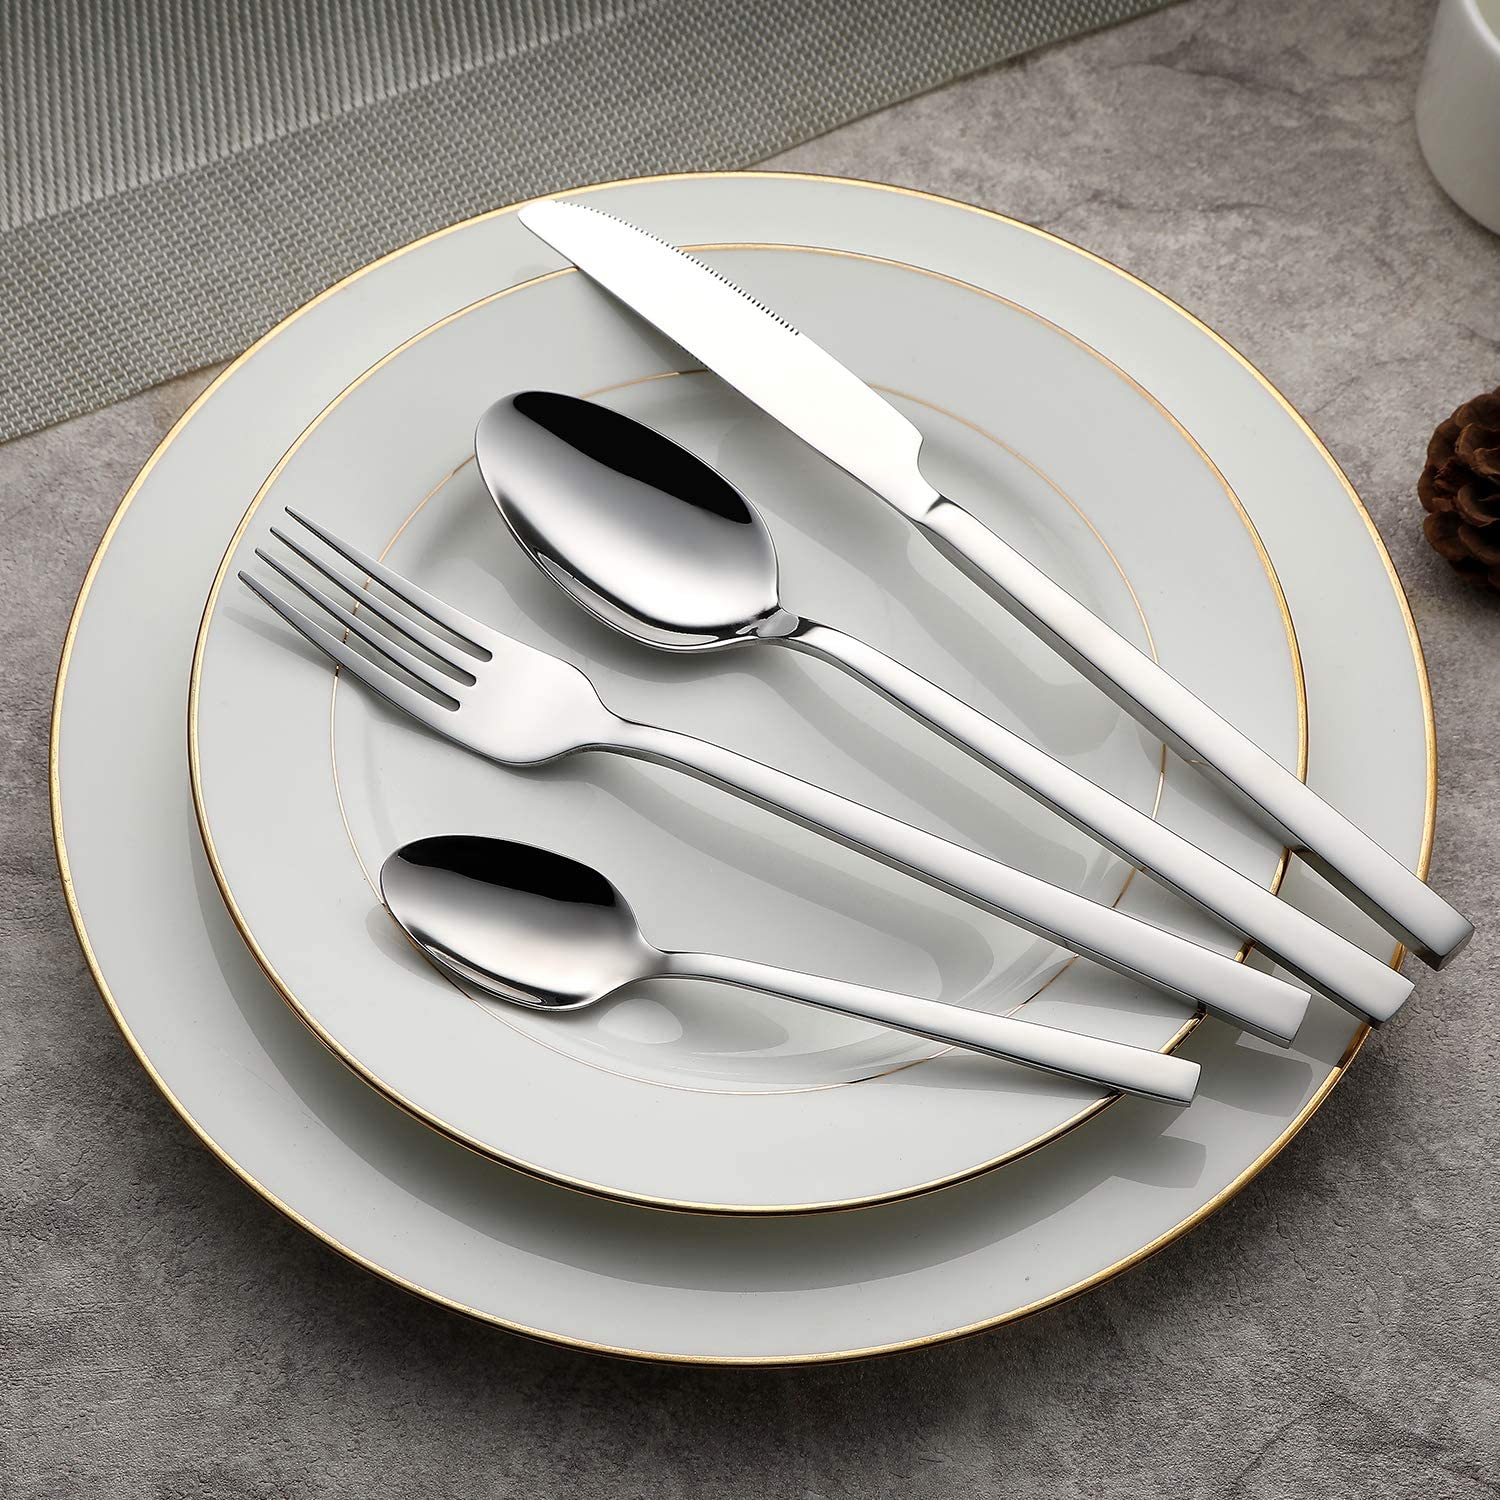 Include Knife/Fork/Spoon/Teaspoon Stainless Steel Dinner Set 48 Piece Dinnerware/Tableware/Silverware Set Service for 12 Person Dishwasher Safe WUJO Cutlery Set Mirror Polished 